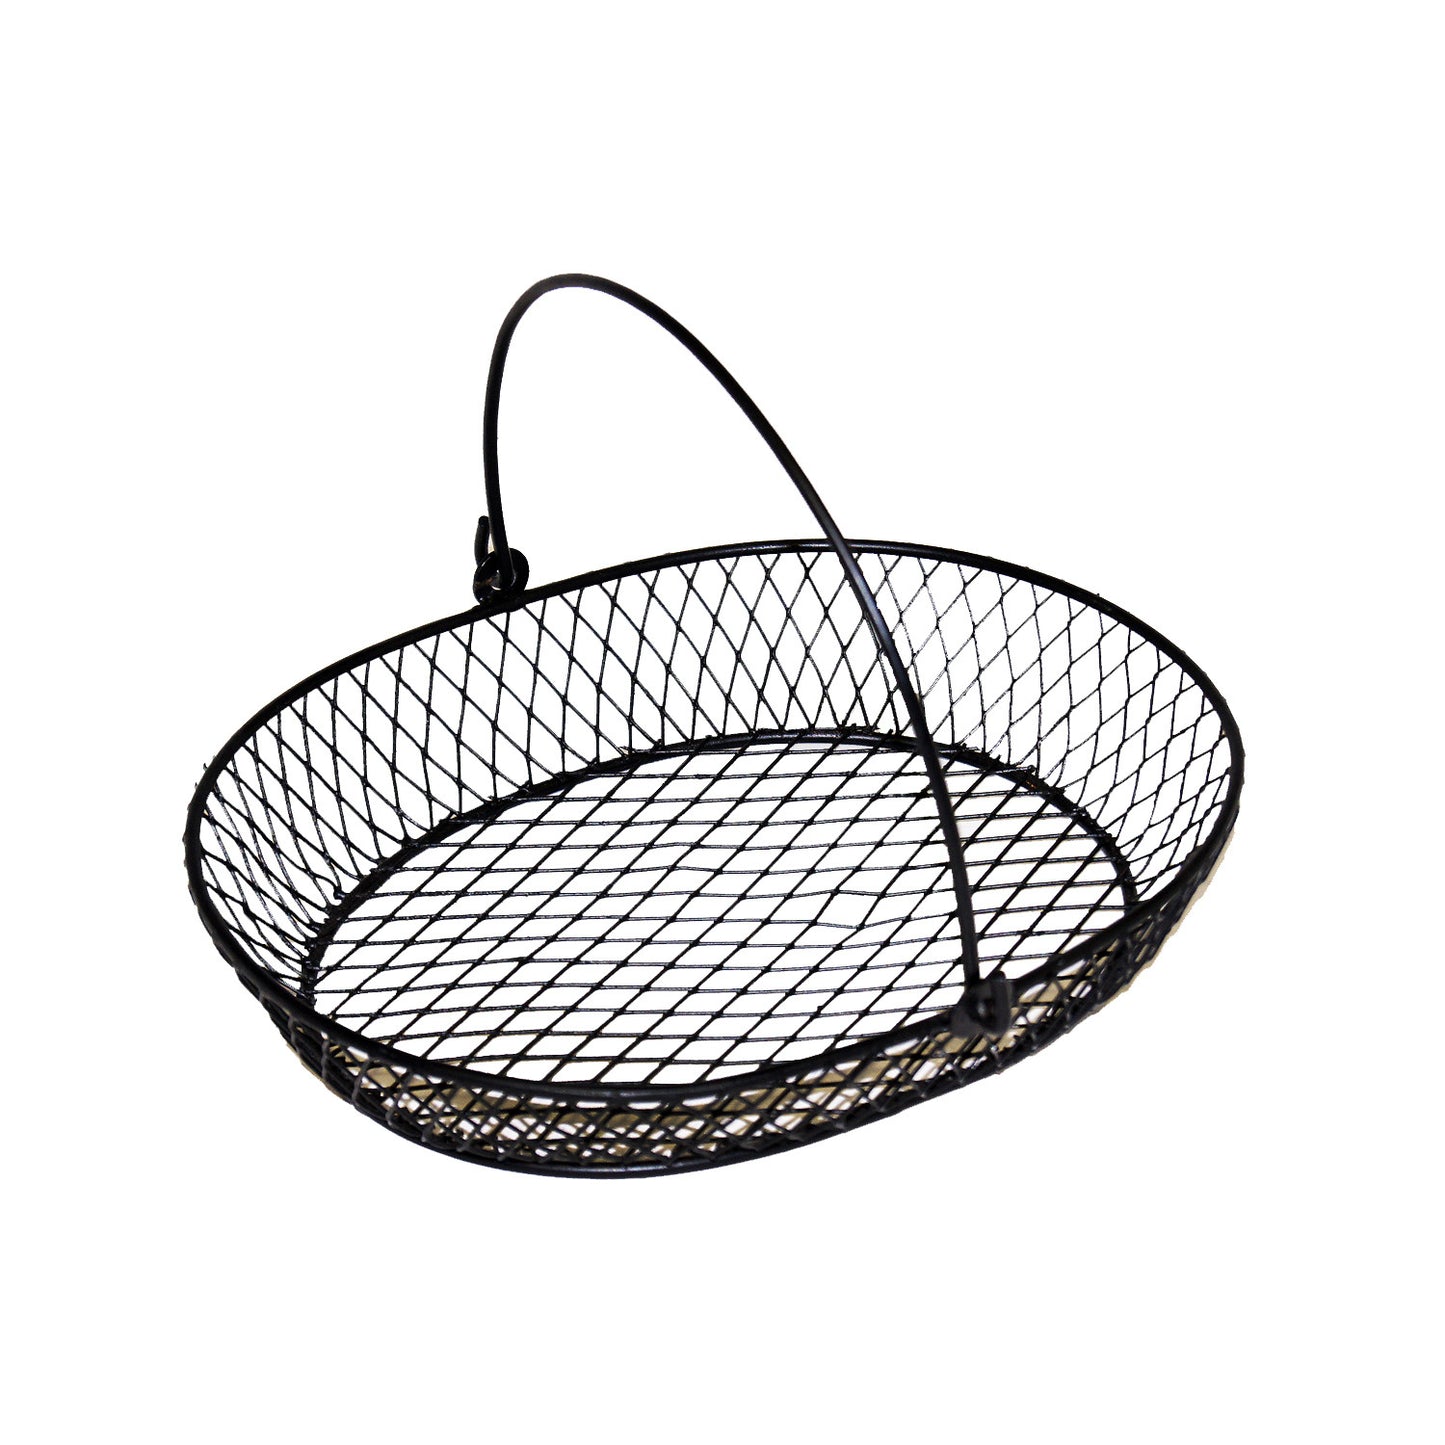 GiftBay 904 Wire Basket Black 10.5"x10.5"x2.5" High